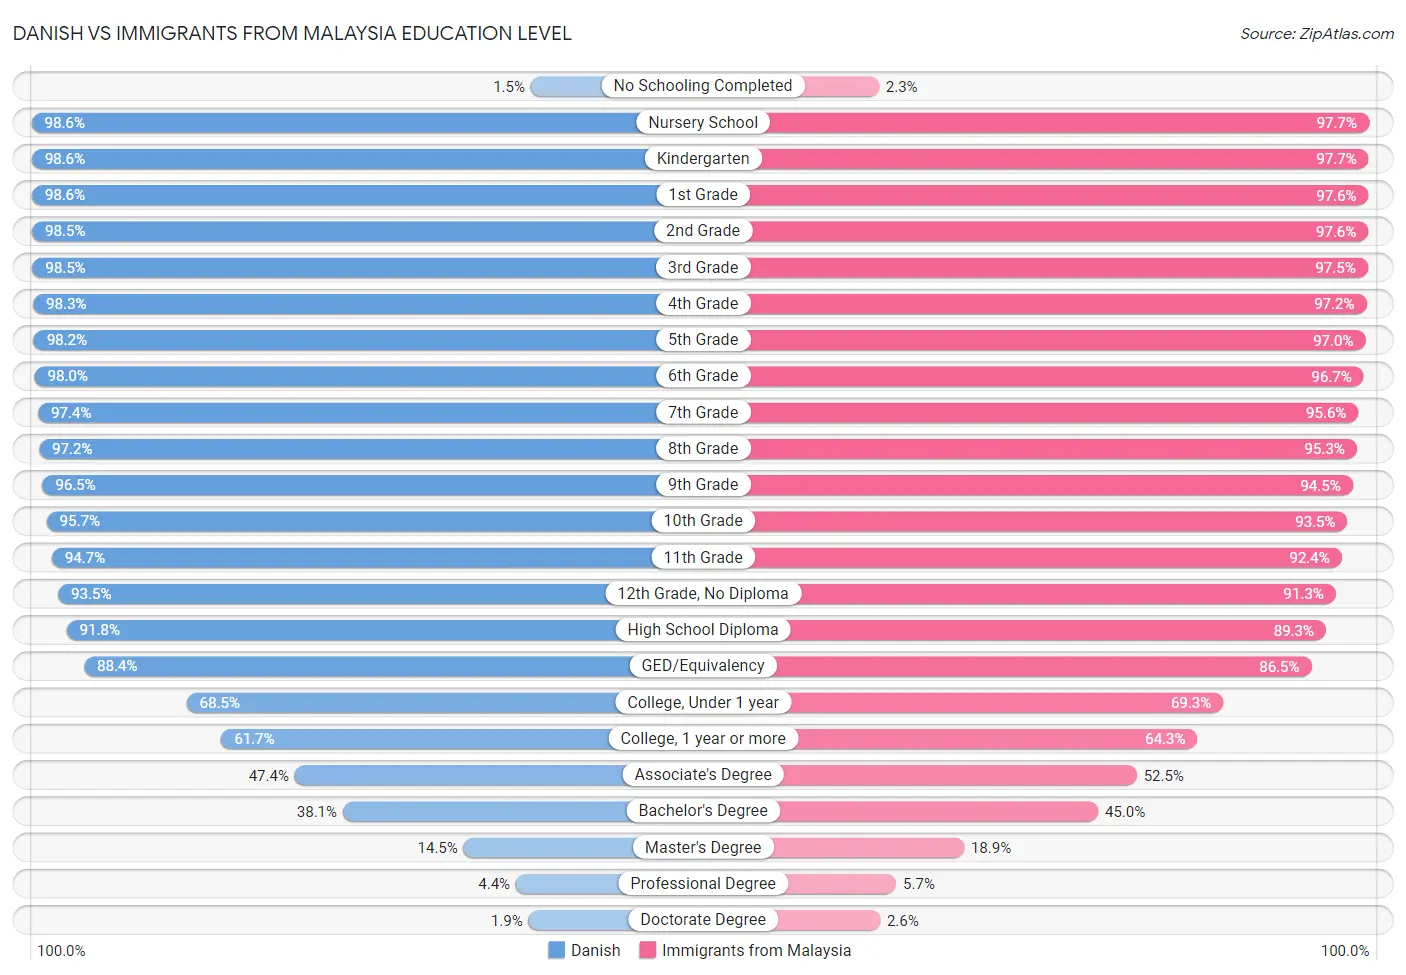 Danish vs Immigrants from Malaysia Education Level